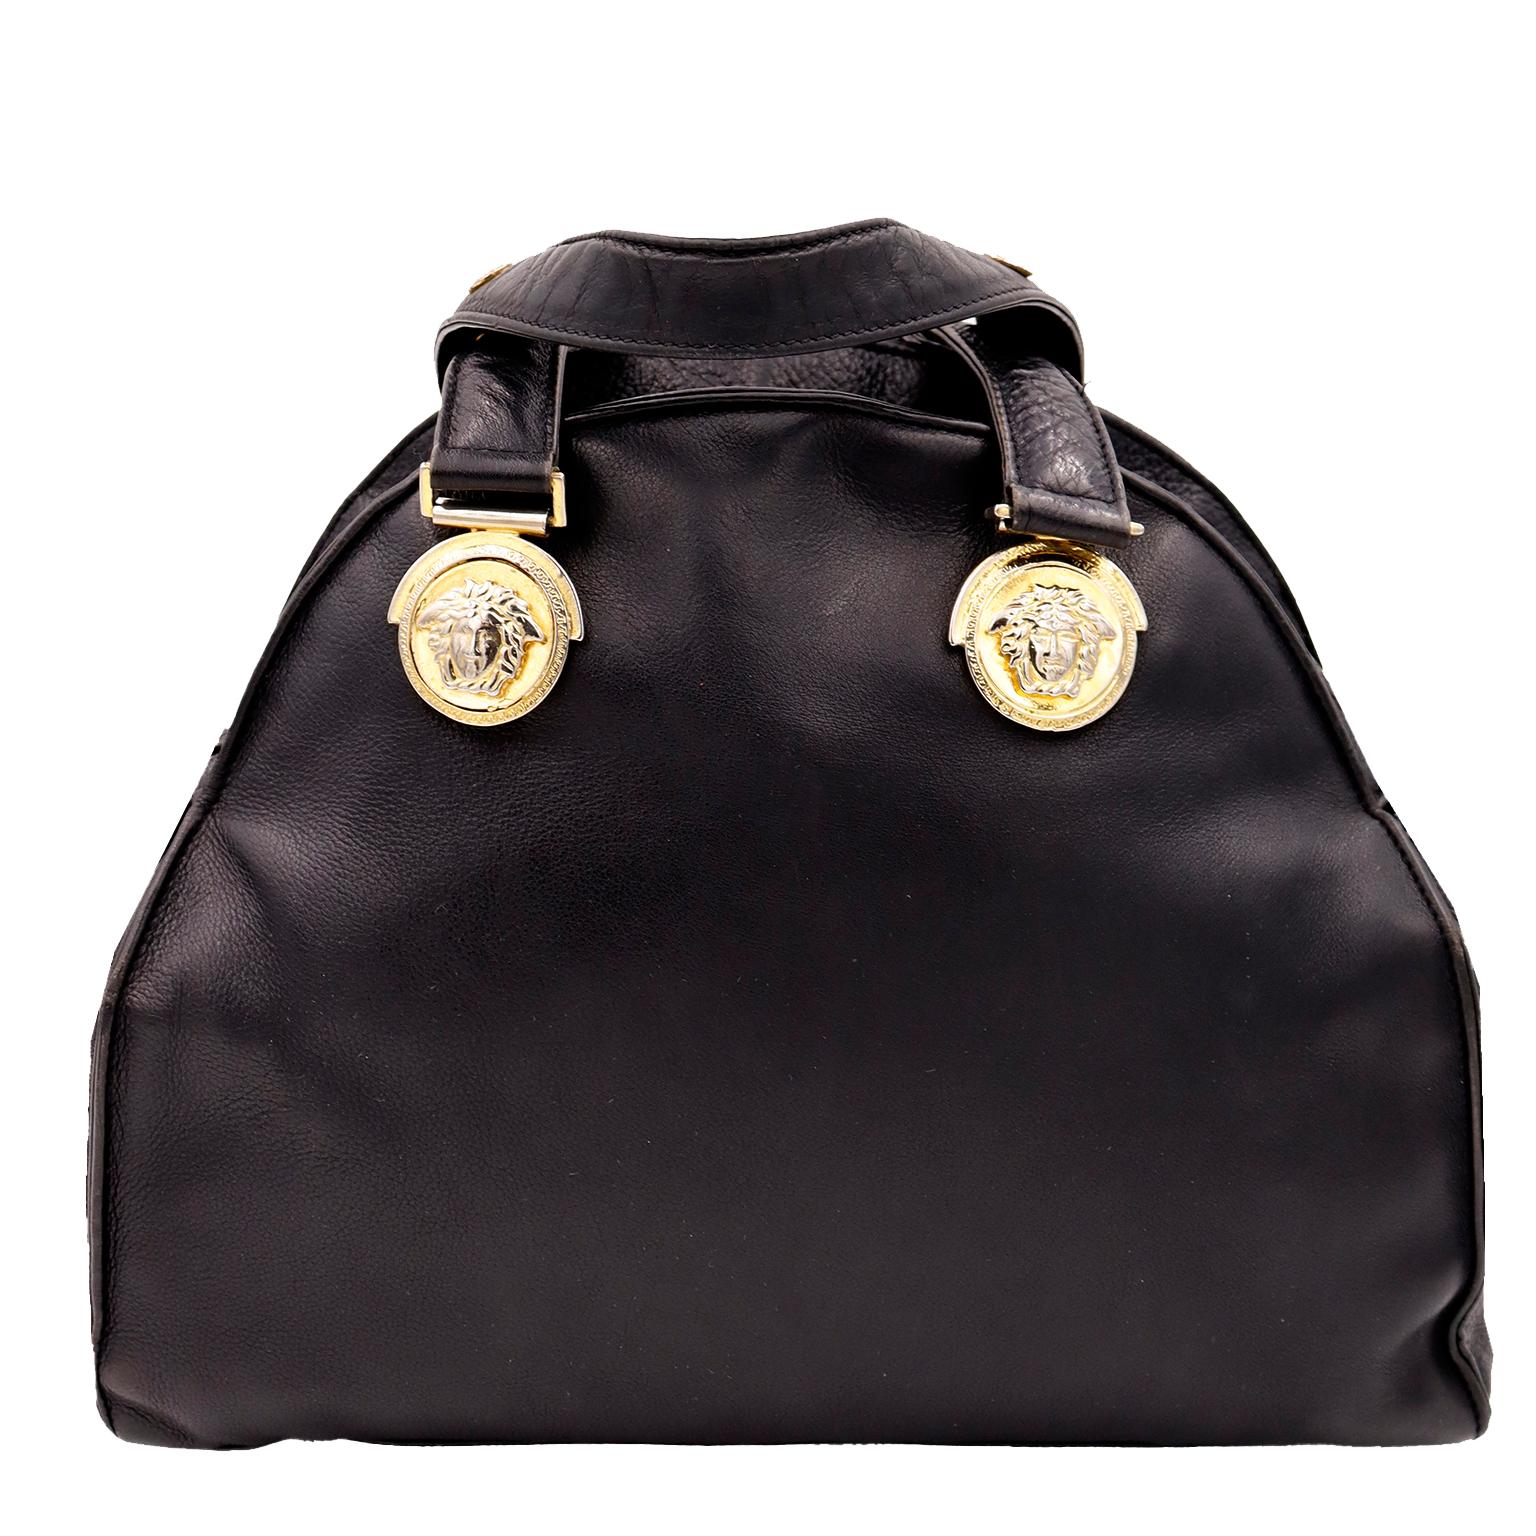 Gianni Versace 1992 Medusa Bondage Black Leather Top Handle Satchel Handbag 1